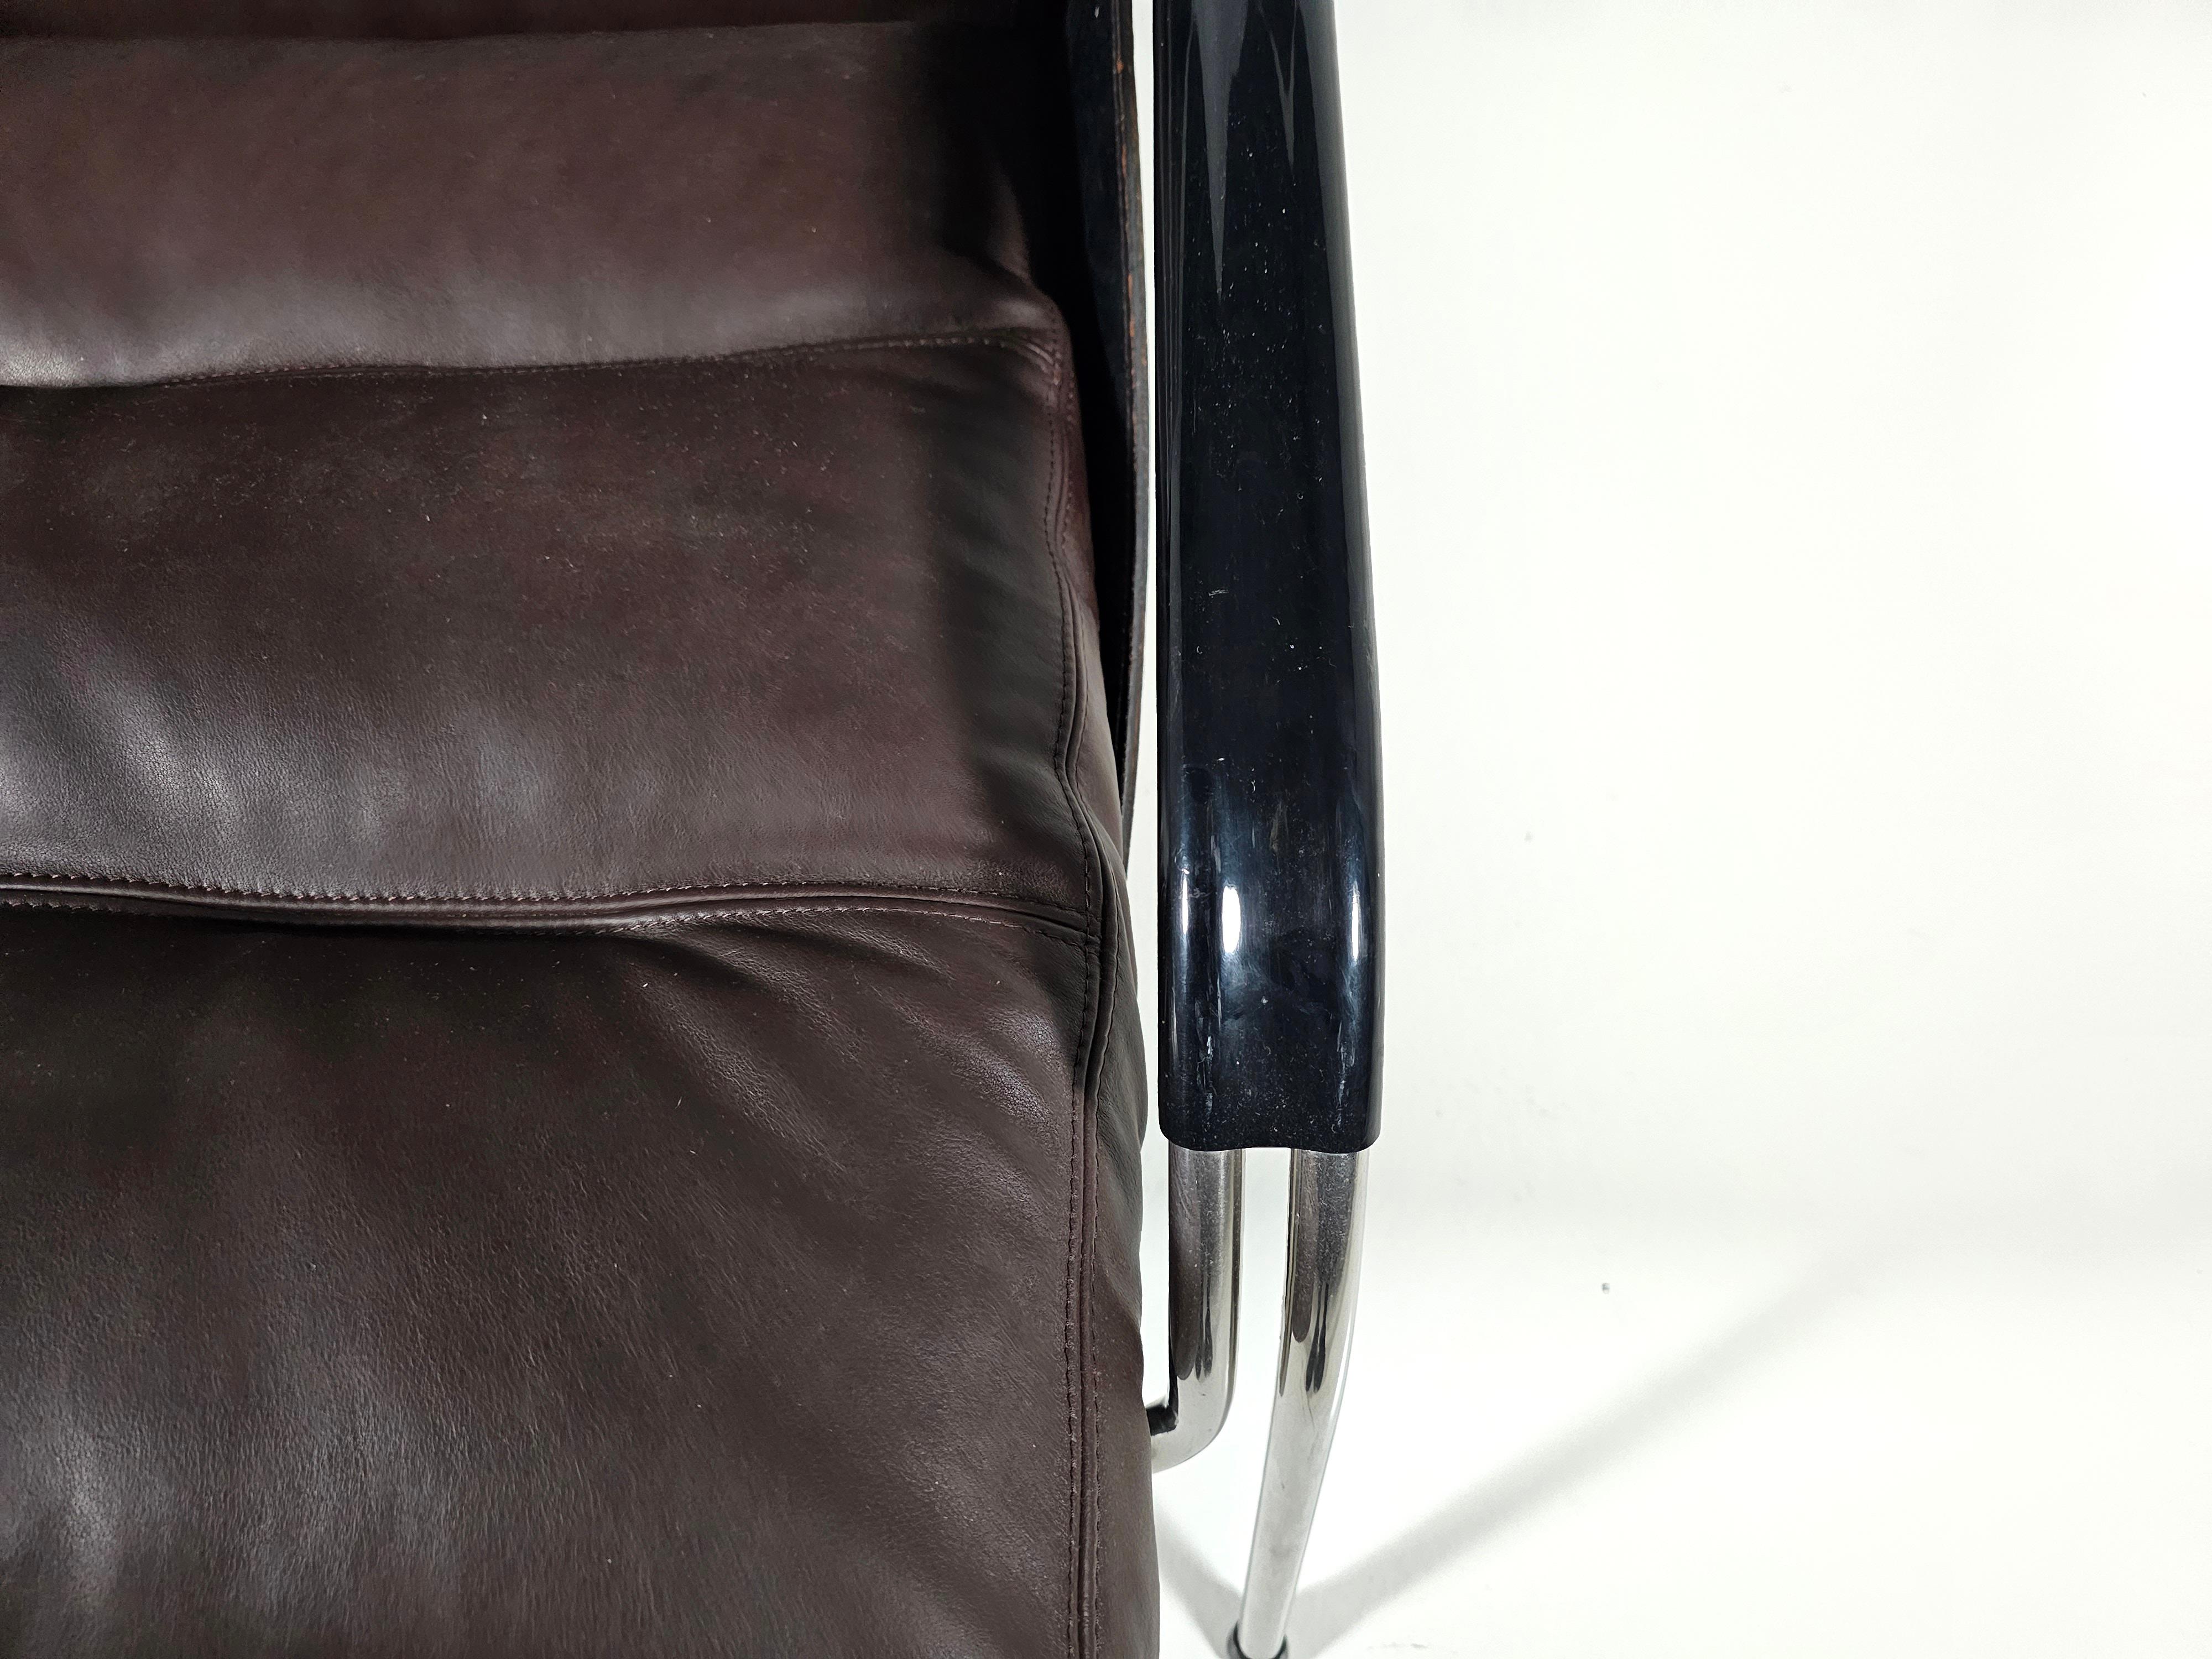  Marco Zanuso Maggiolina lounge chairs in brown and black leather, Zanotta, 1950 1